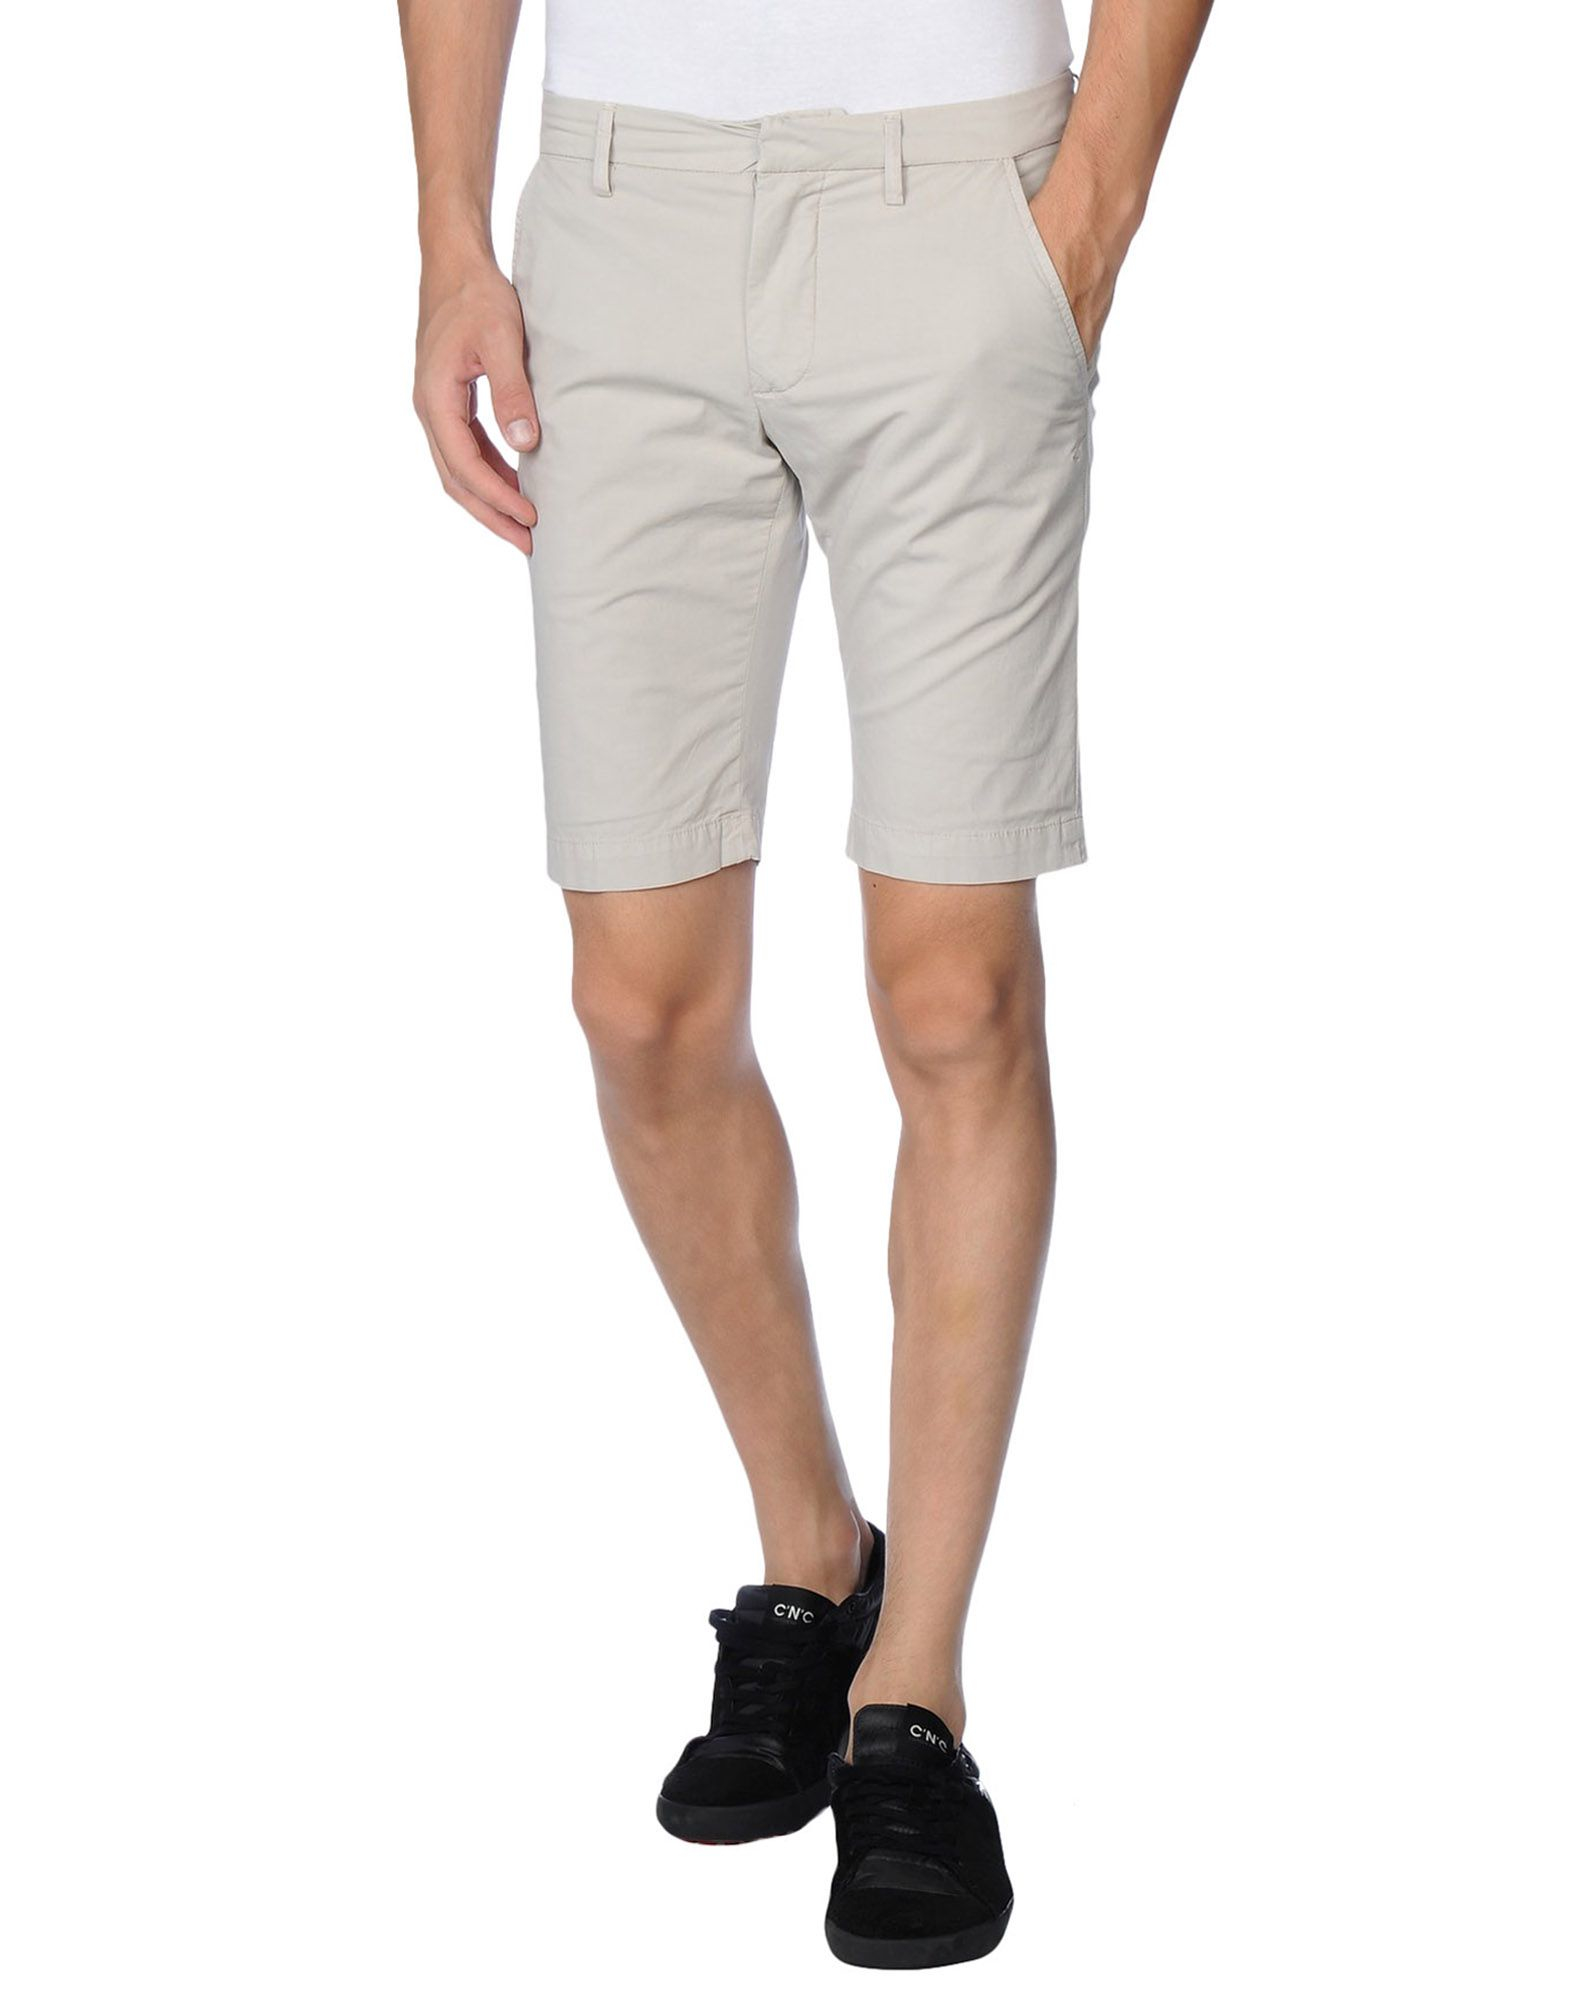 Lyst - Dondup Bermuda Shorts in Gray for Men